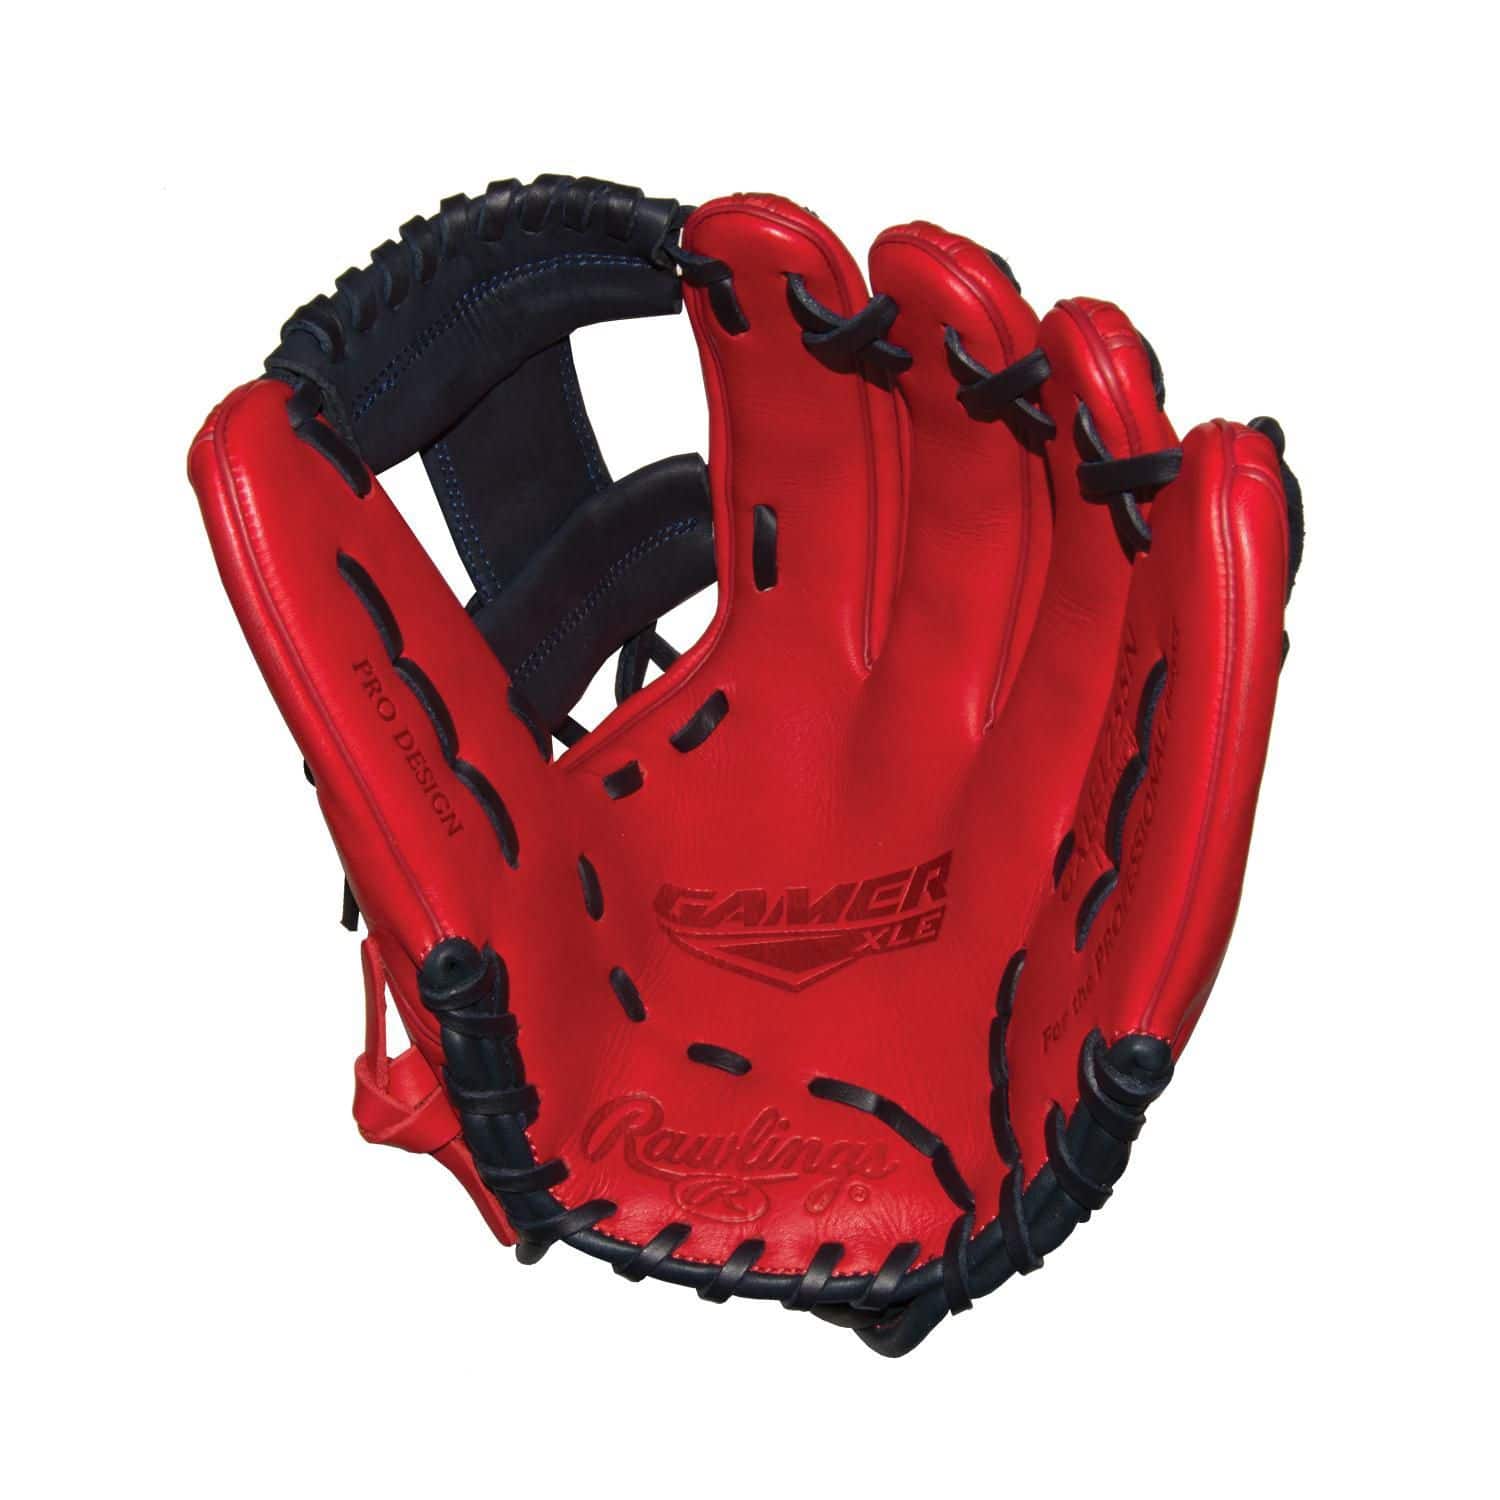 Gant de baseball Rawlings Gamer XLE, régulier, 11,75 po, rouge